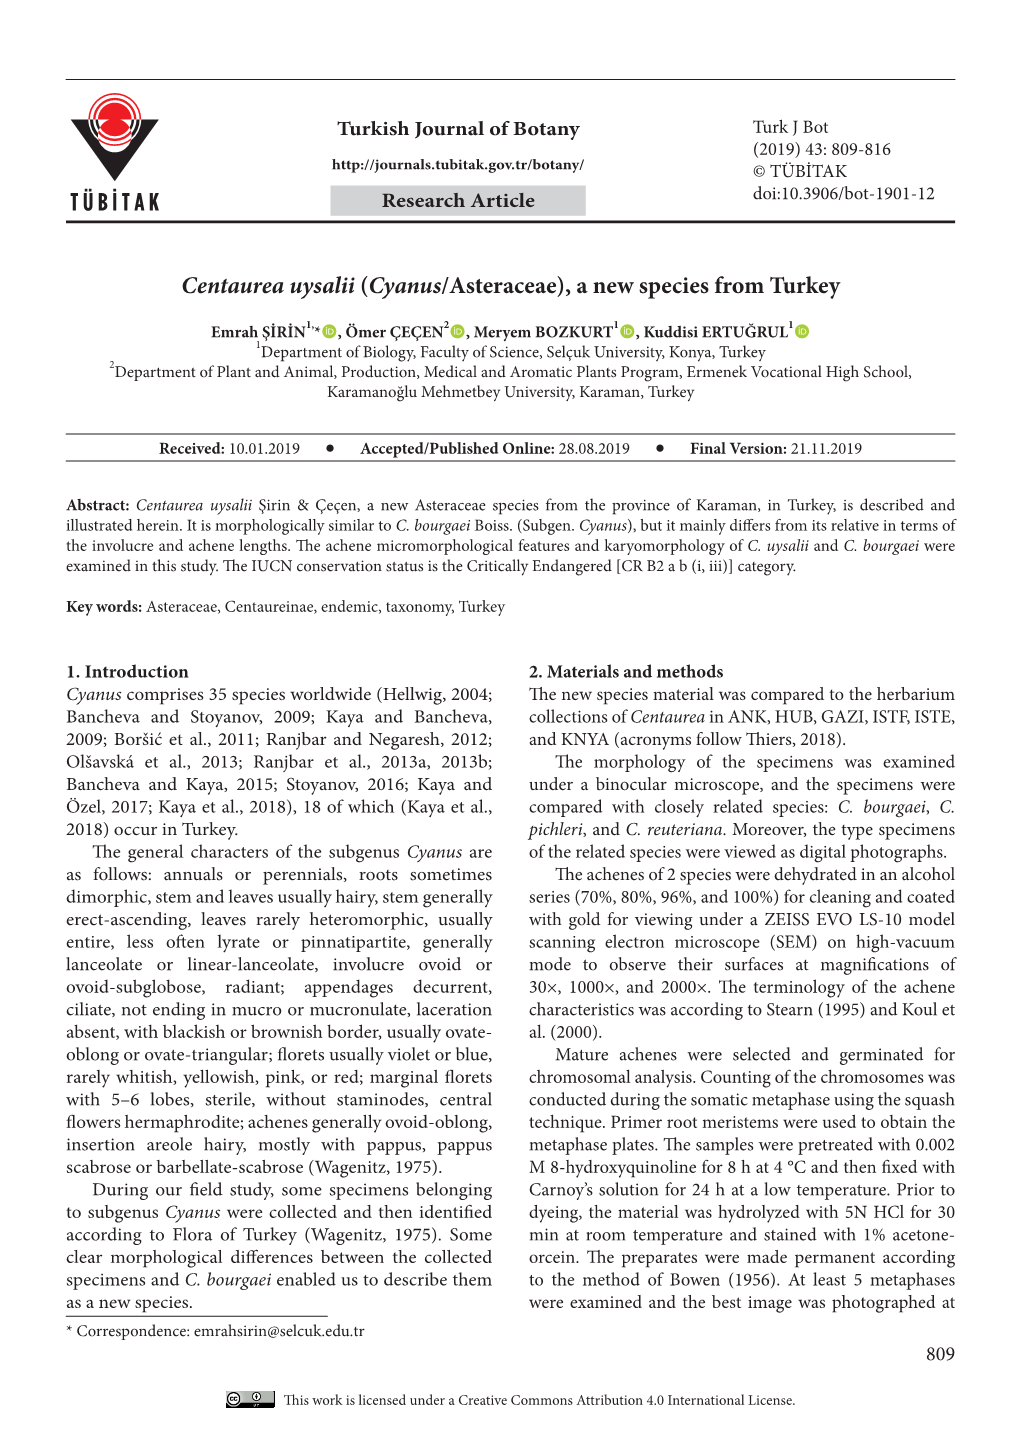 Centaurea Uysalii (Cyanus/Asteraceae), a New Species from Turkey